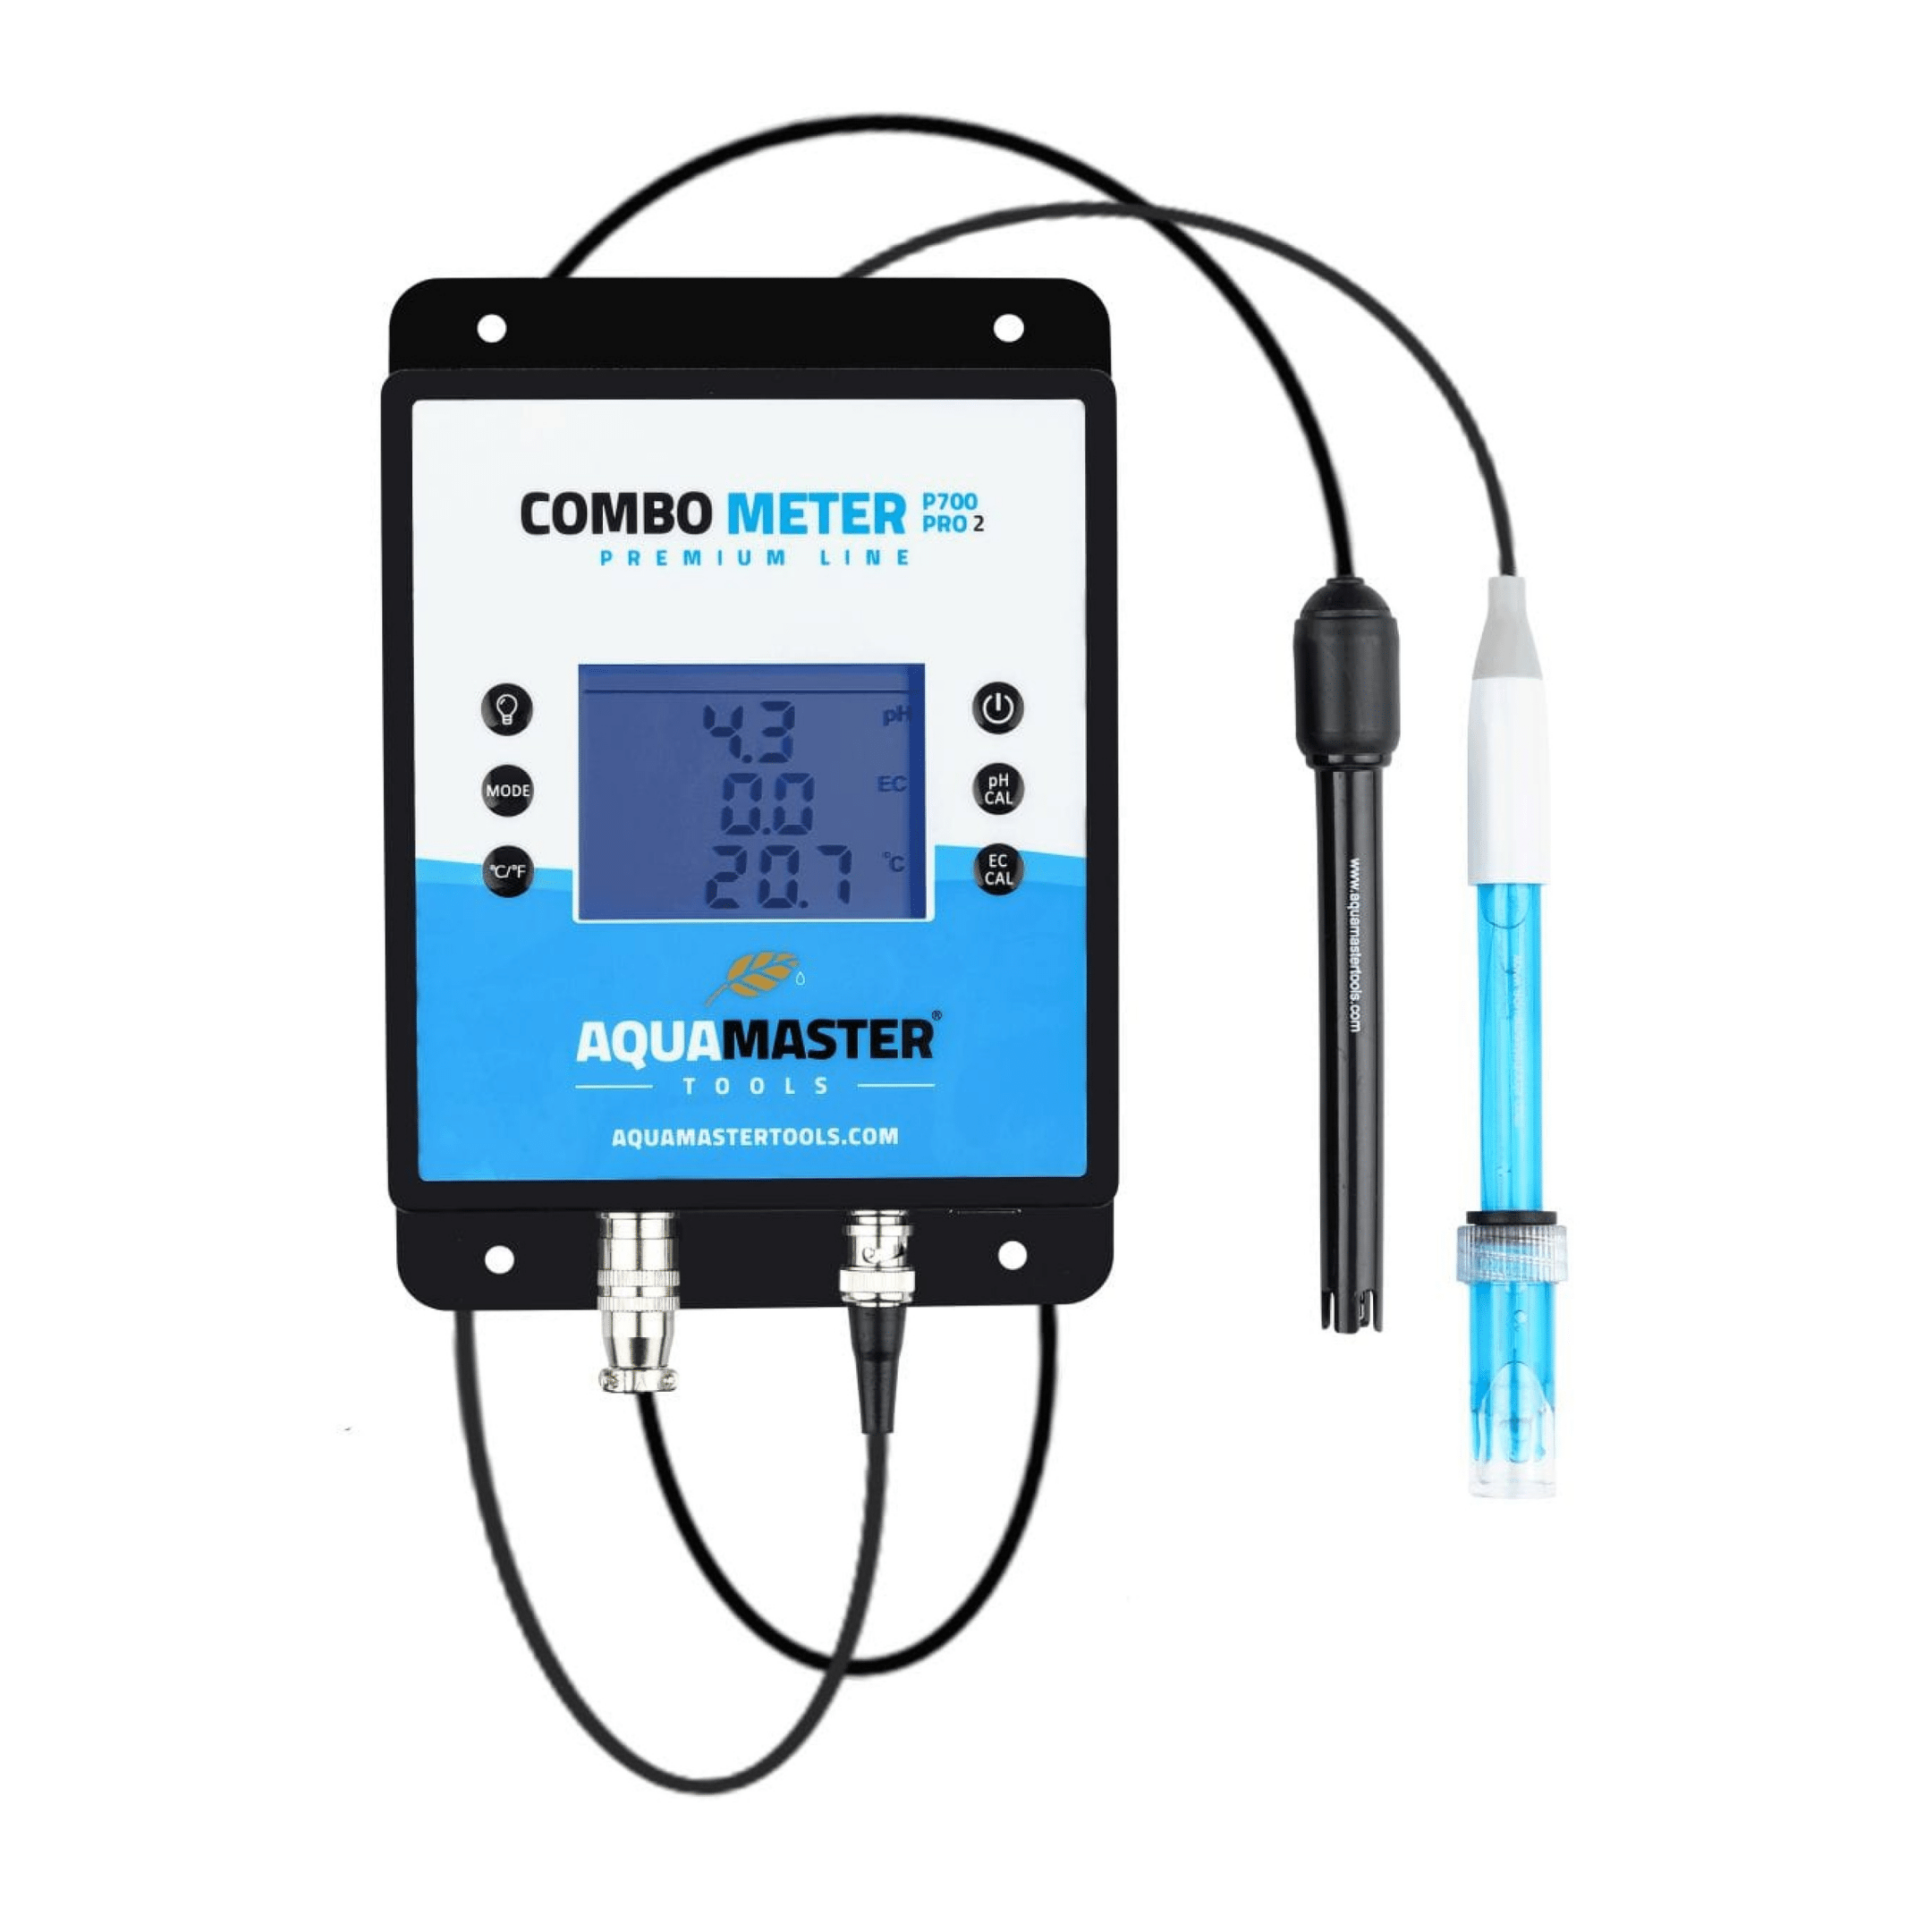 Aqua Master Hydroponic Supplies > Water Test Meters & Solutions > EC & pH Meters Aqua Master P700 Pro 2 Combo Meter (pH, EC, CF, PPM, Temp)